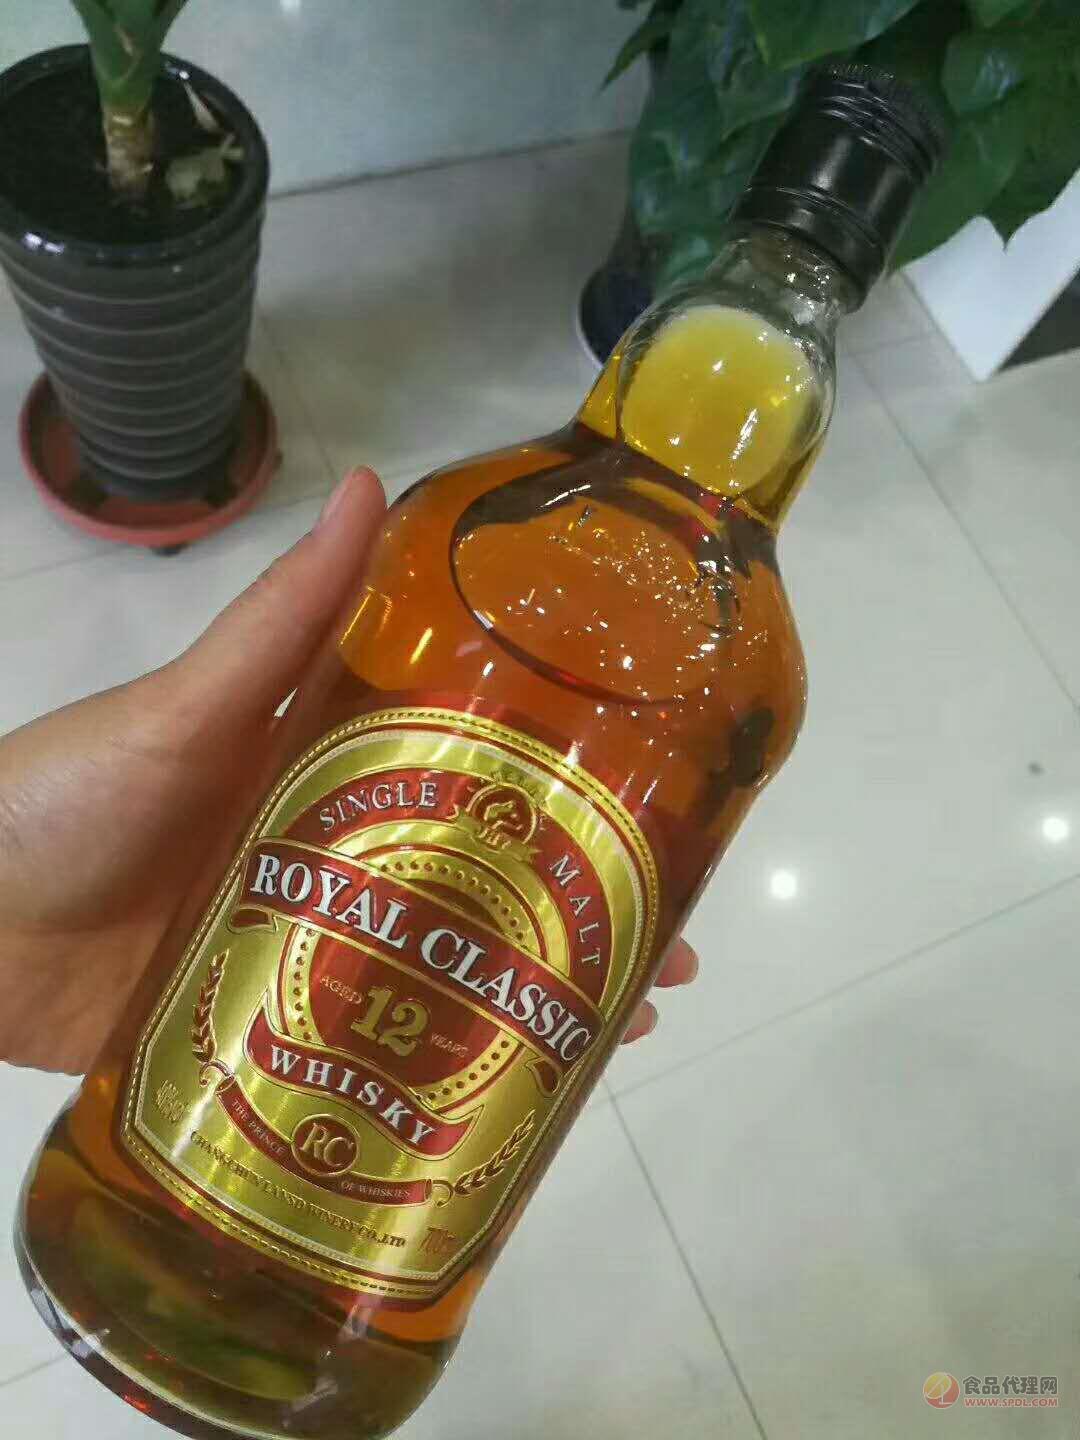 royal classic洋酒瓶装